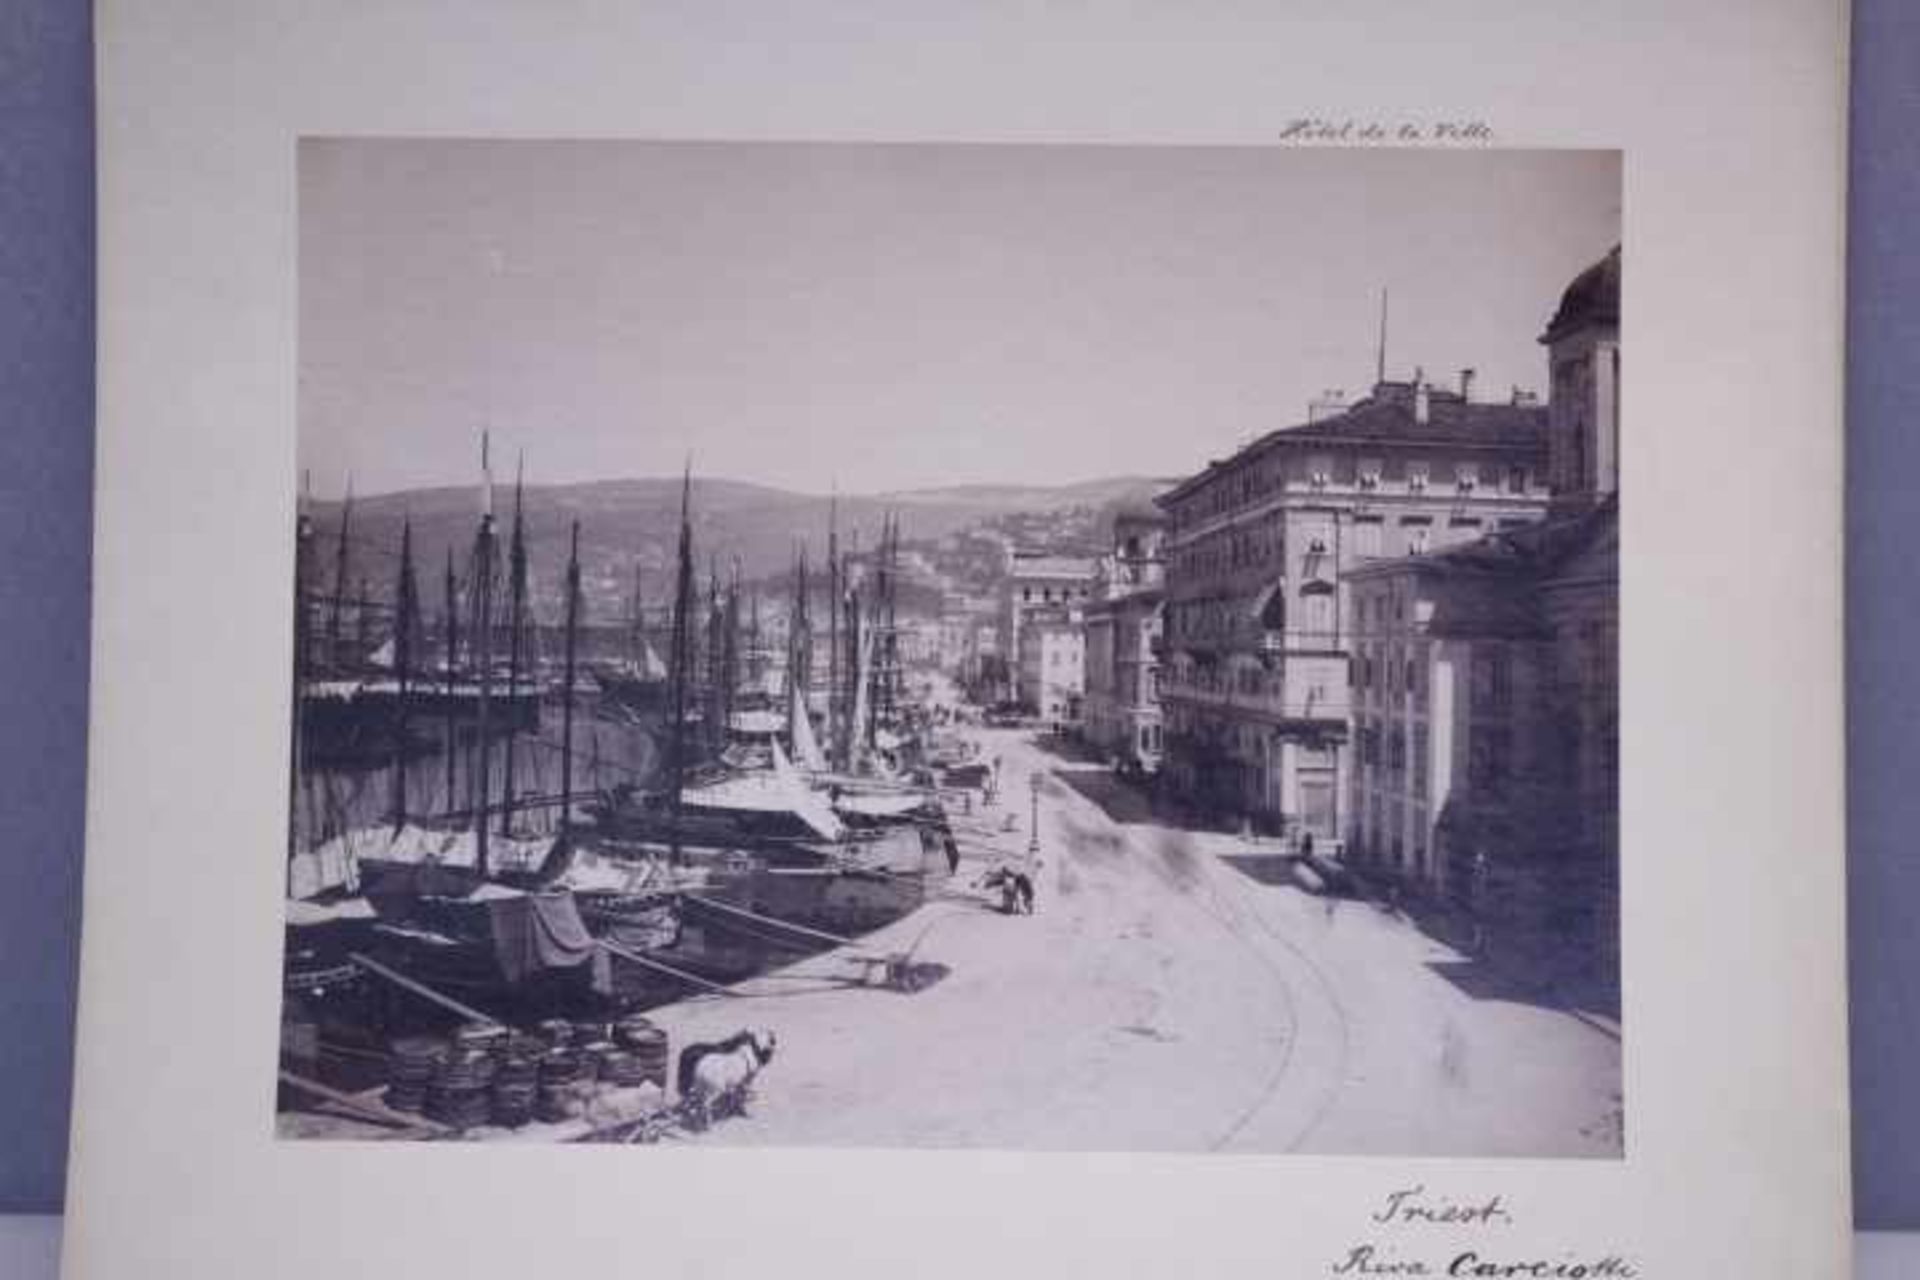 Albumin Fotos 2 St. um 19201.Mailand Strebepfeiler am Dom2.Triest Riva CarciottiHotel de la Villeauf